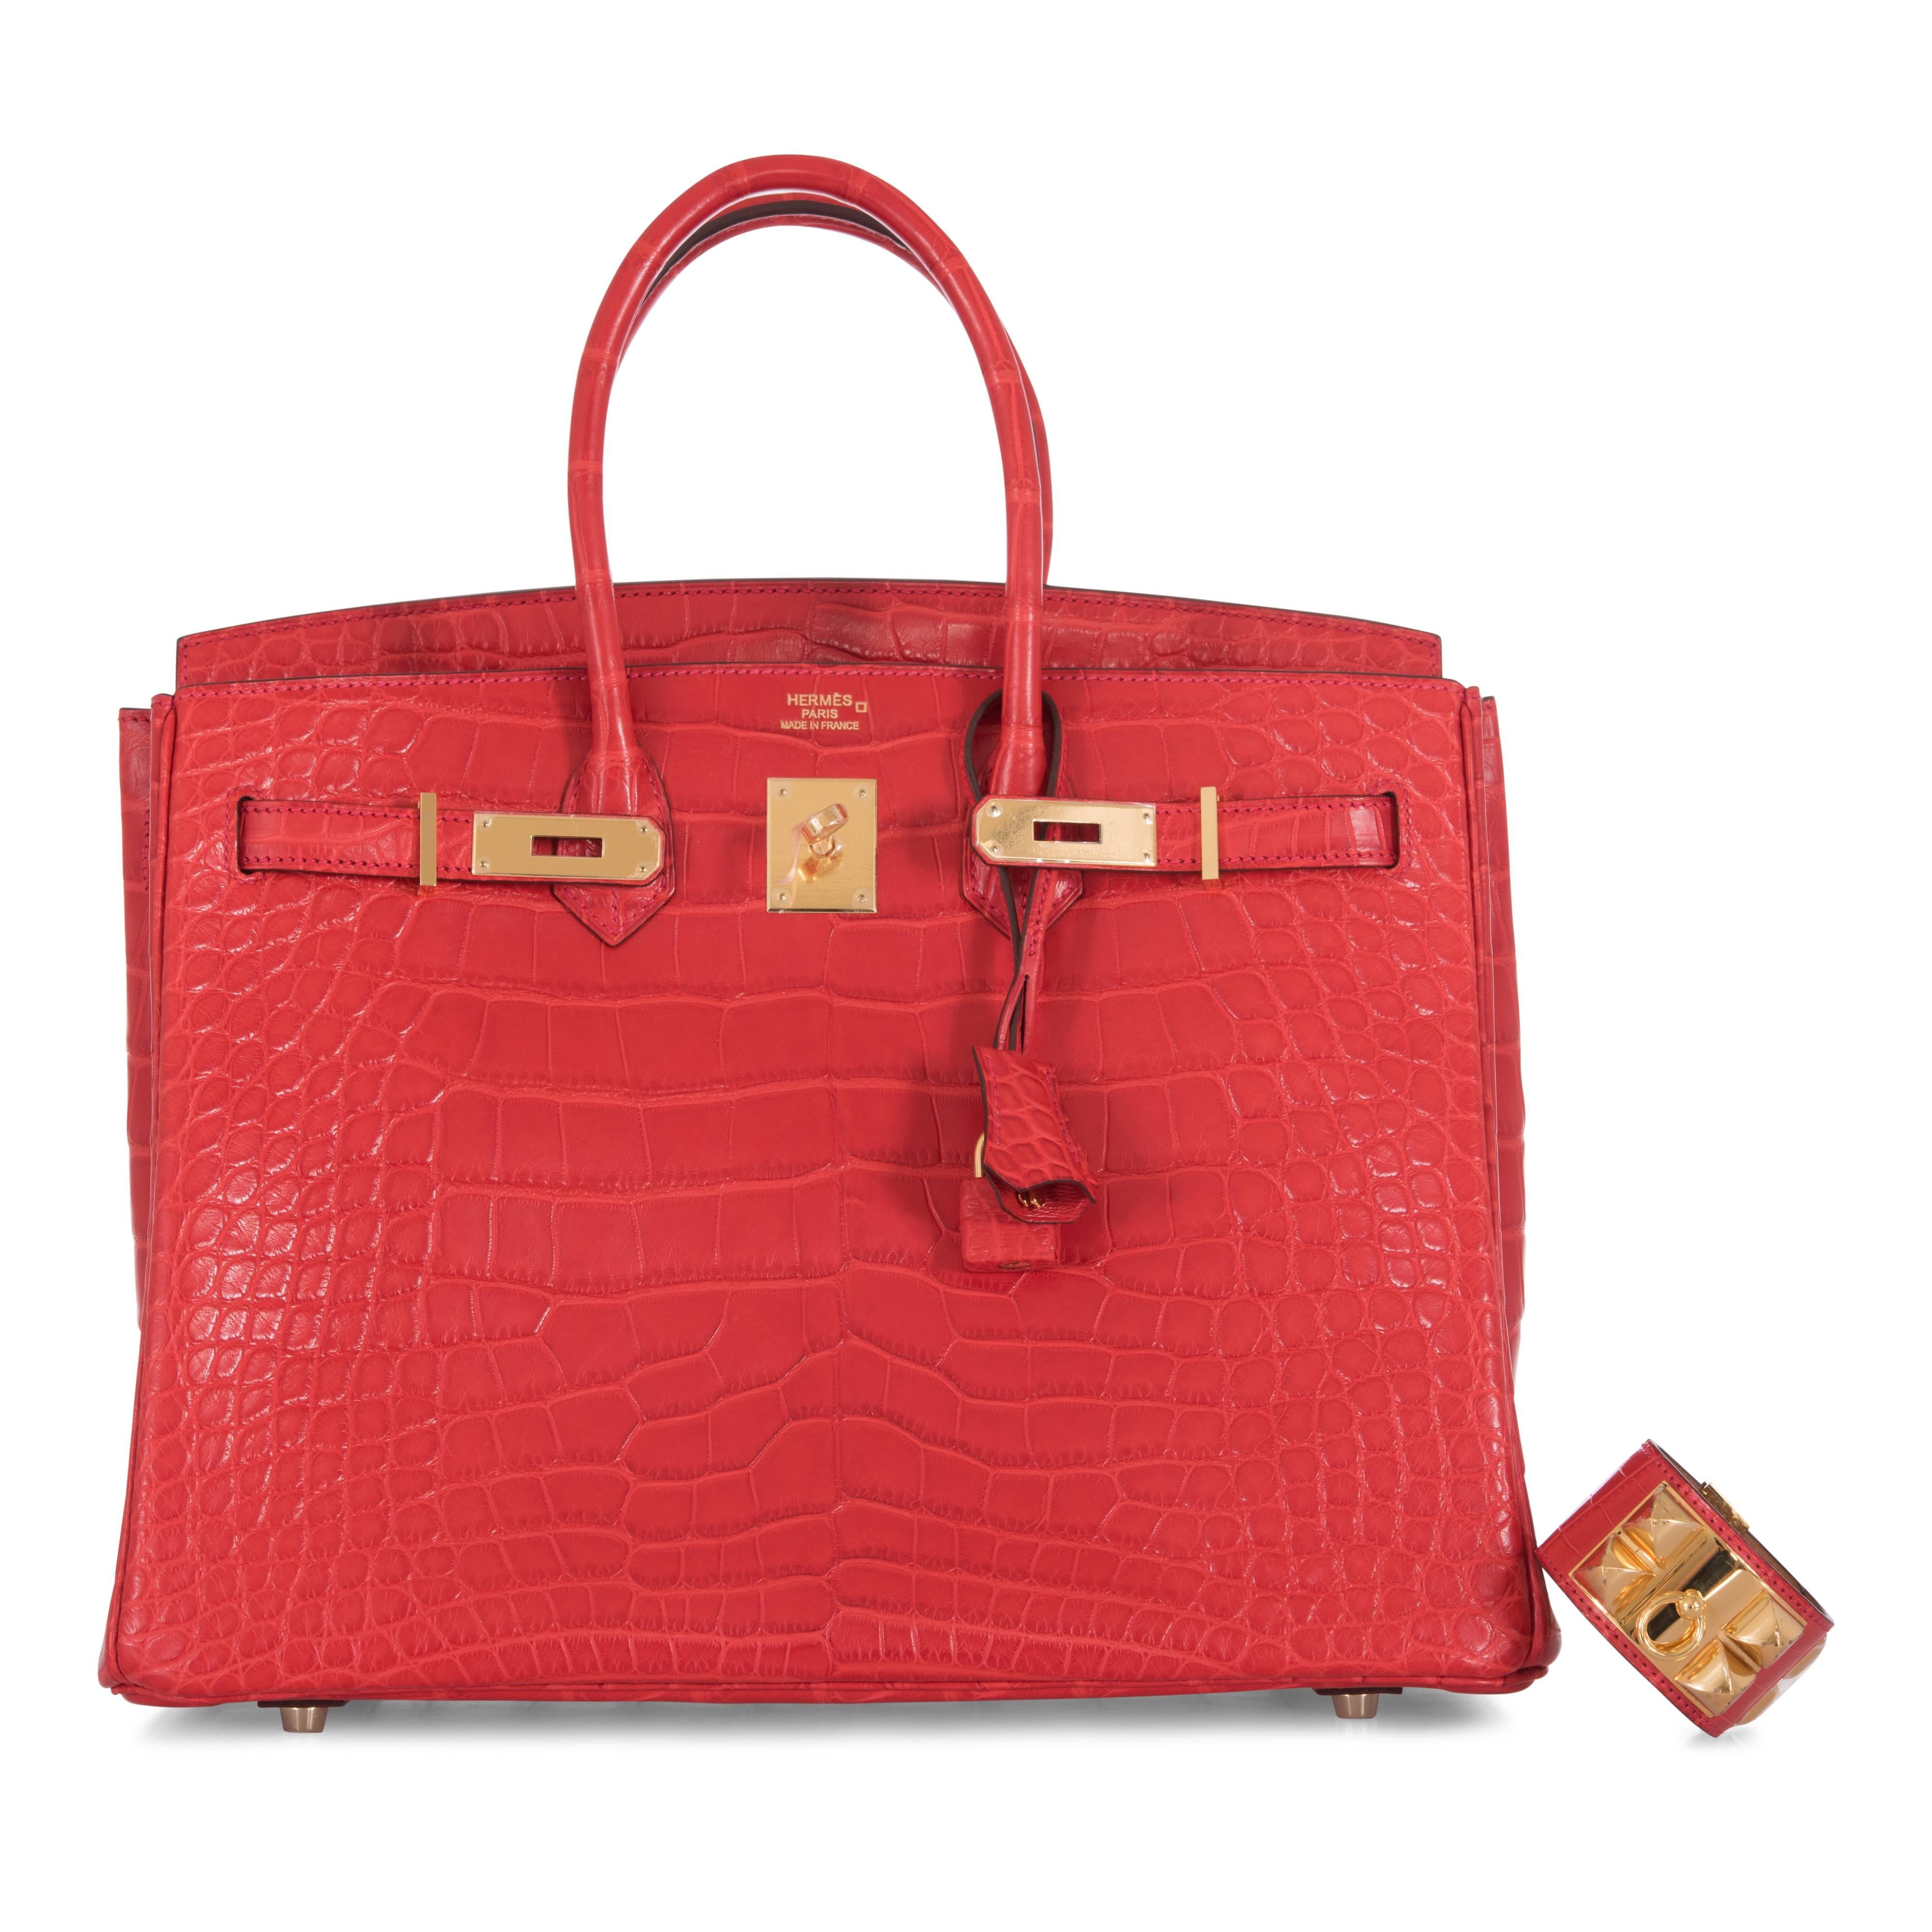 Hermes 35cm Birkin Bag Geranium Red Matte Alligator With Insane Gold Hardware For Sale 6